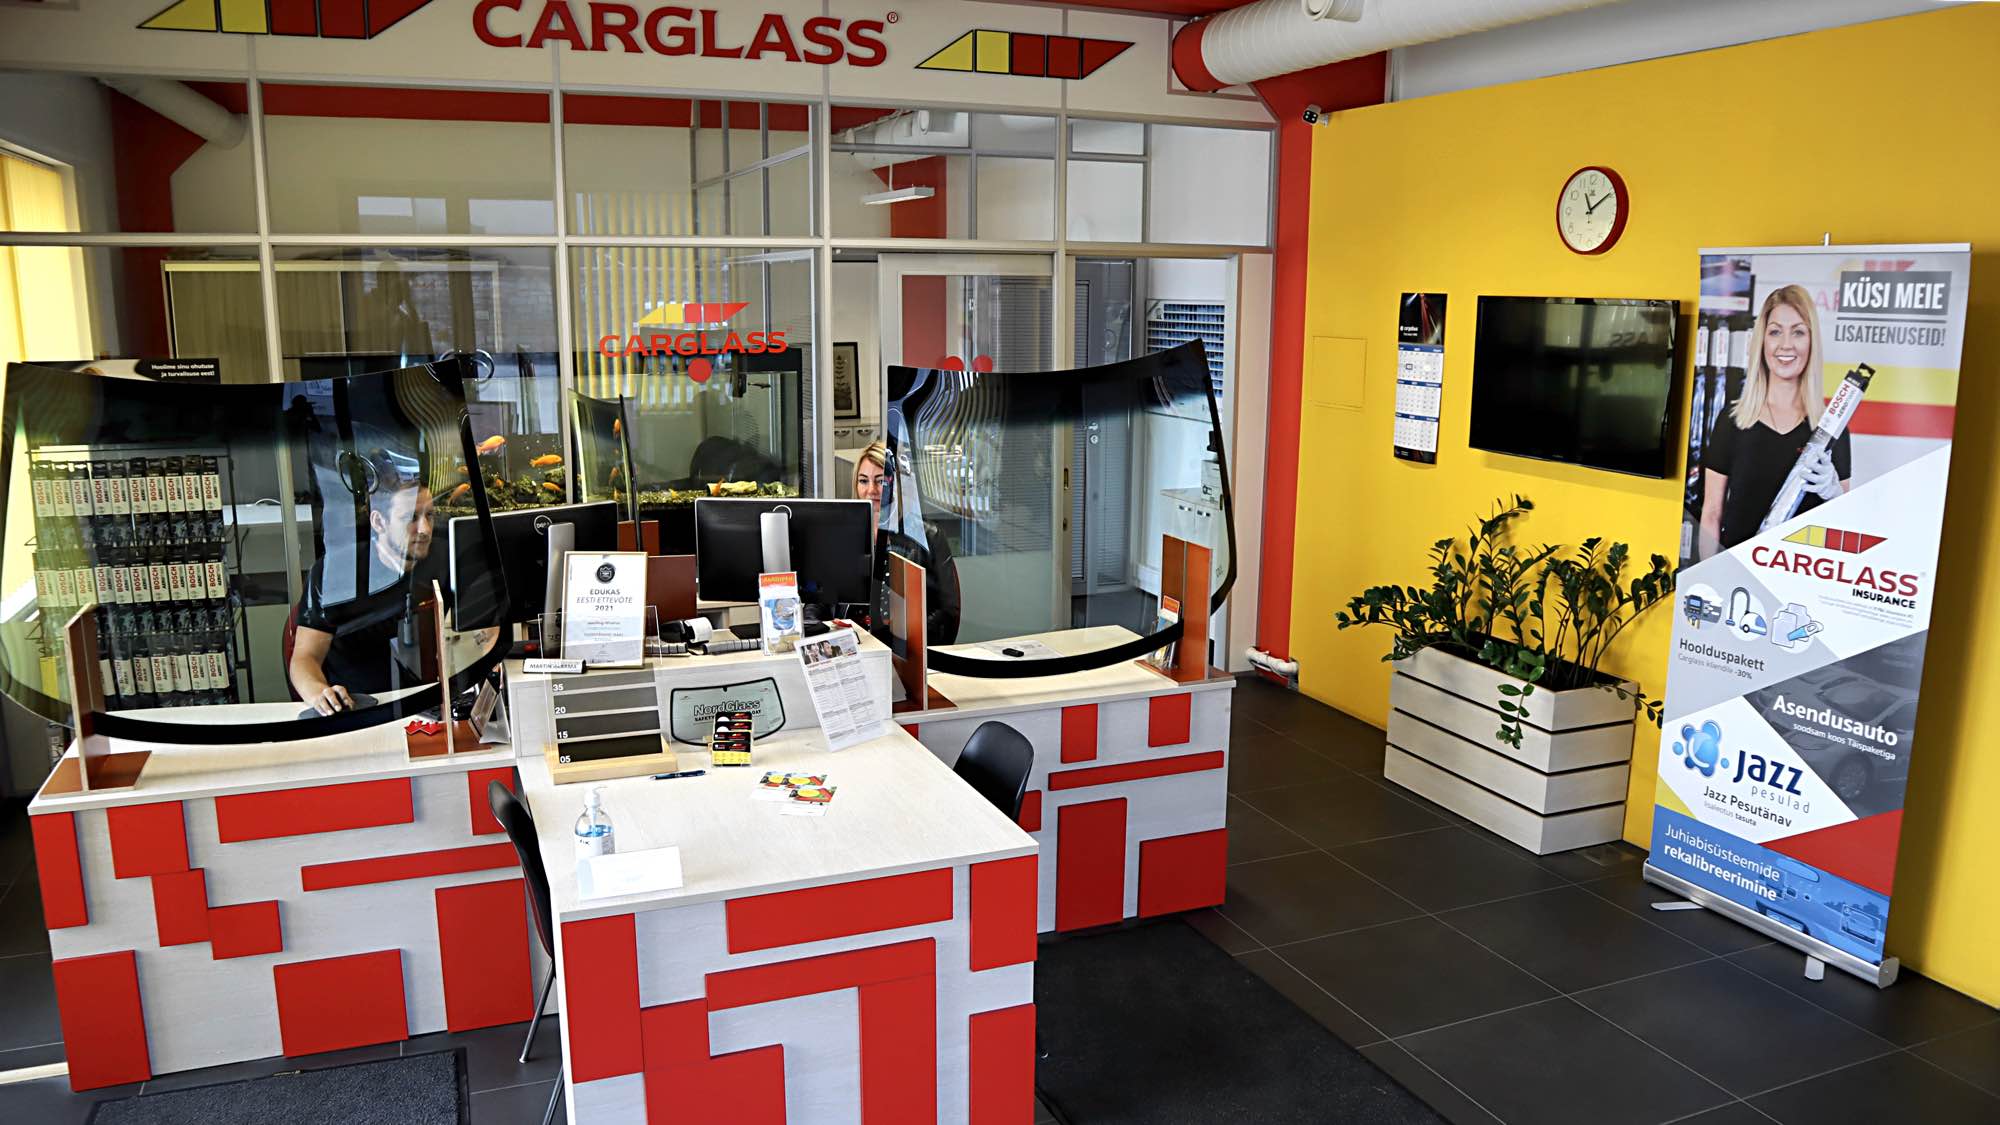 Carglass® Estonia Kesklinna workshop